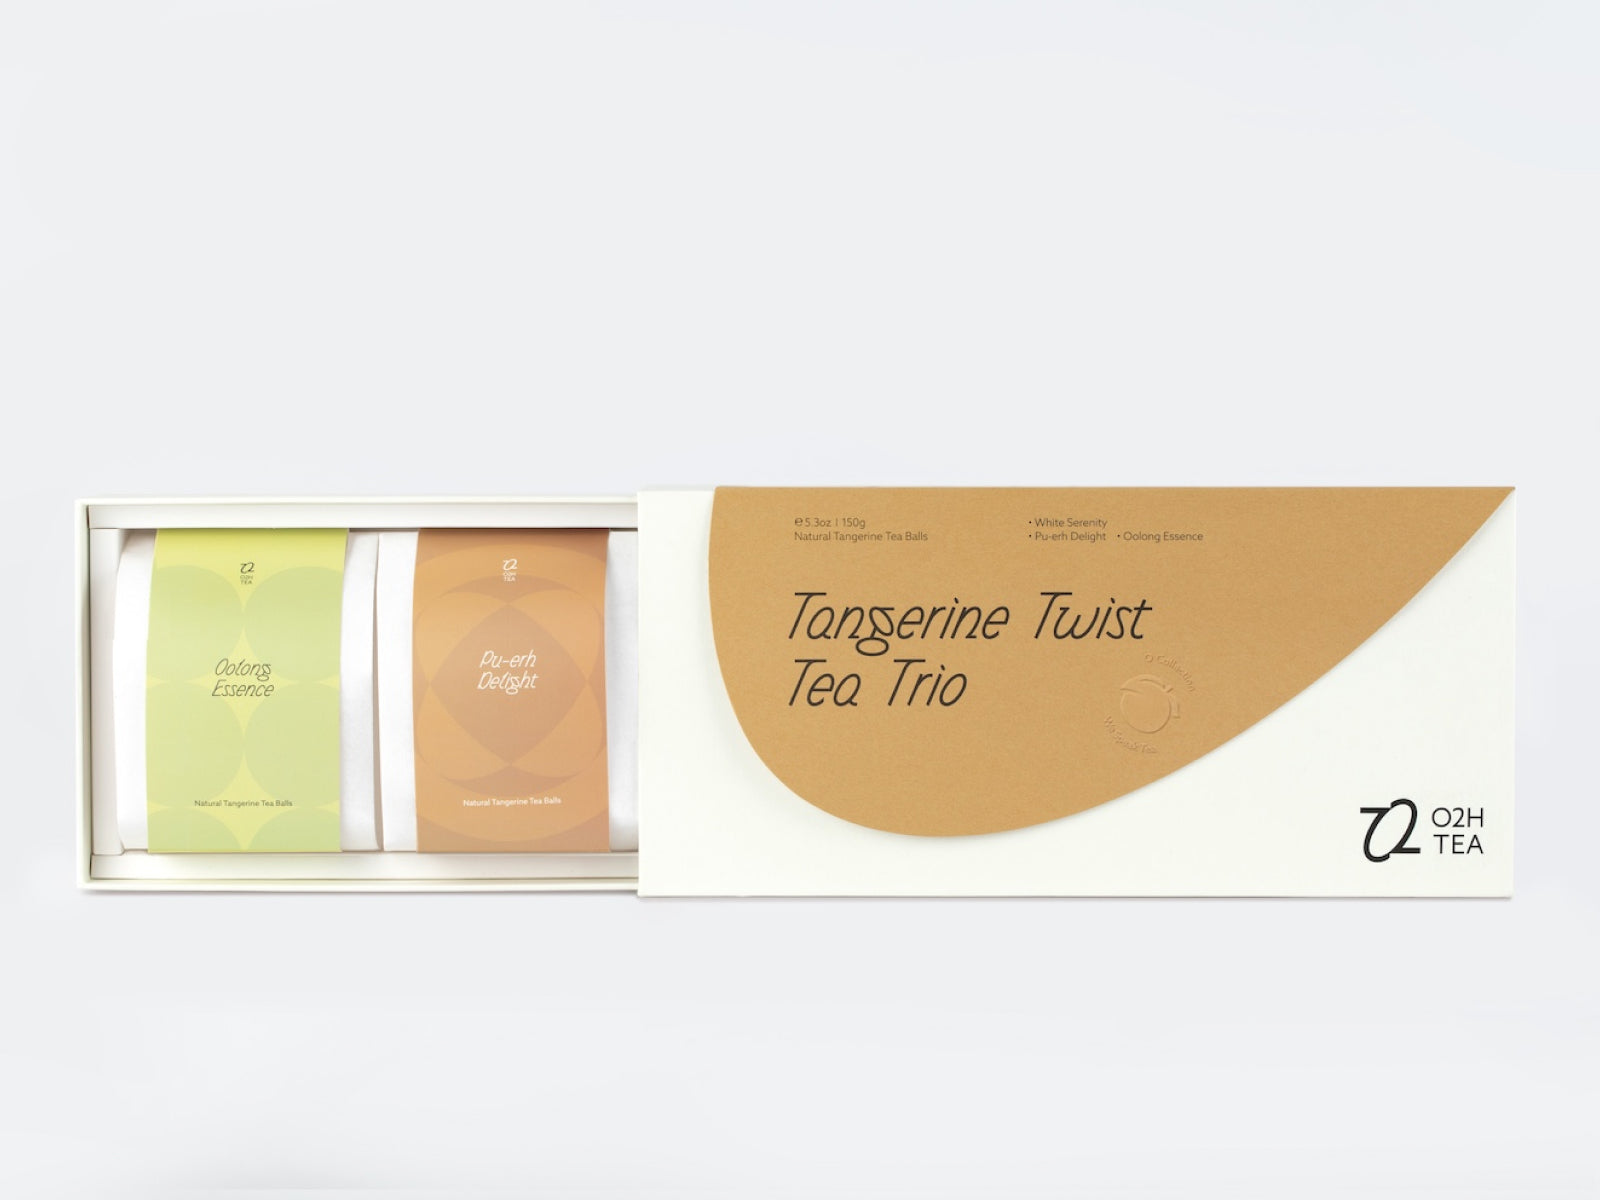 Open box display of O2H TEA Tangerine Twist Tea Trio, showcasing the premium selection of natural tangerine oolong, rich pu-erh, and delicate white tea